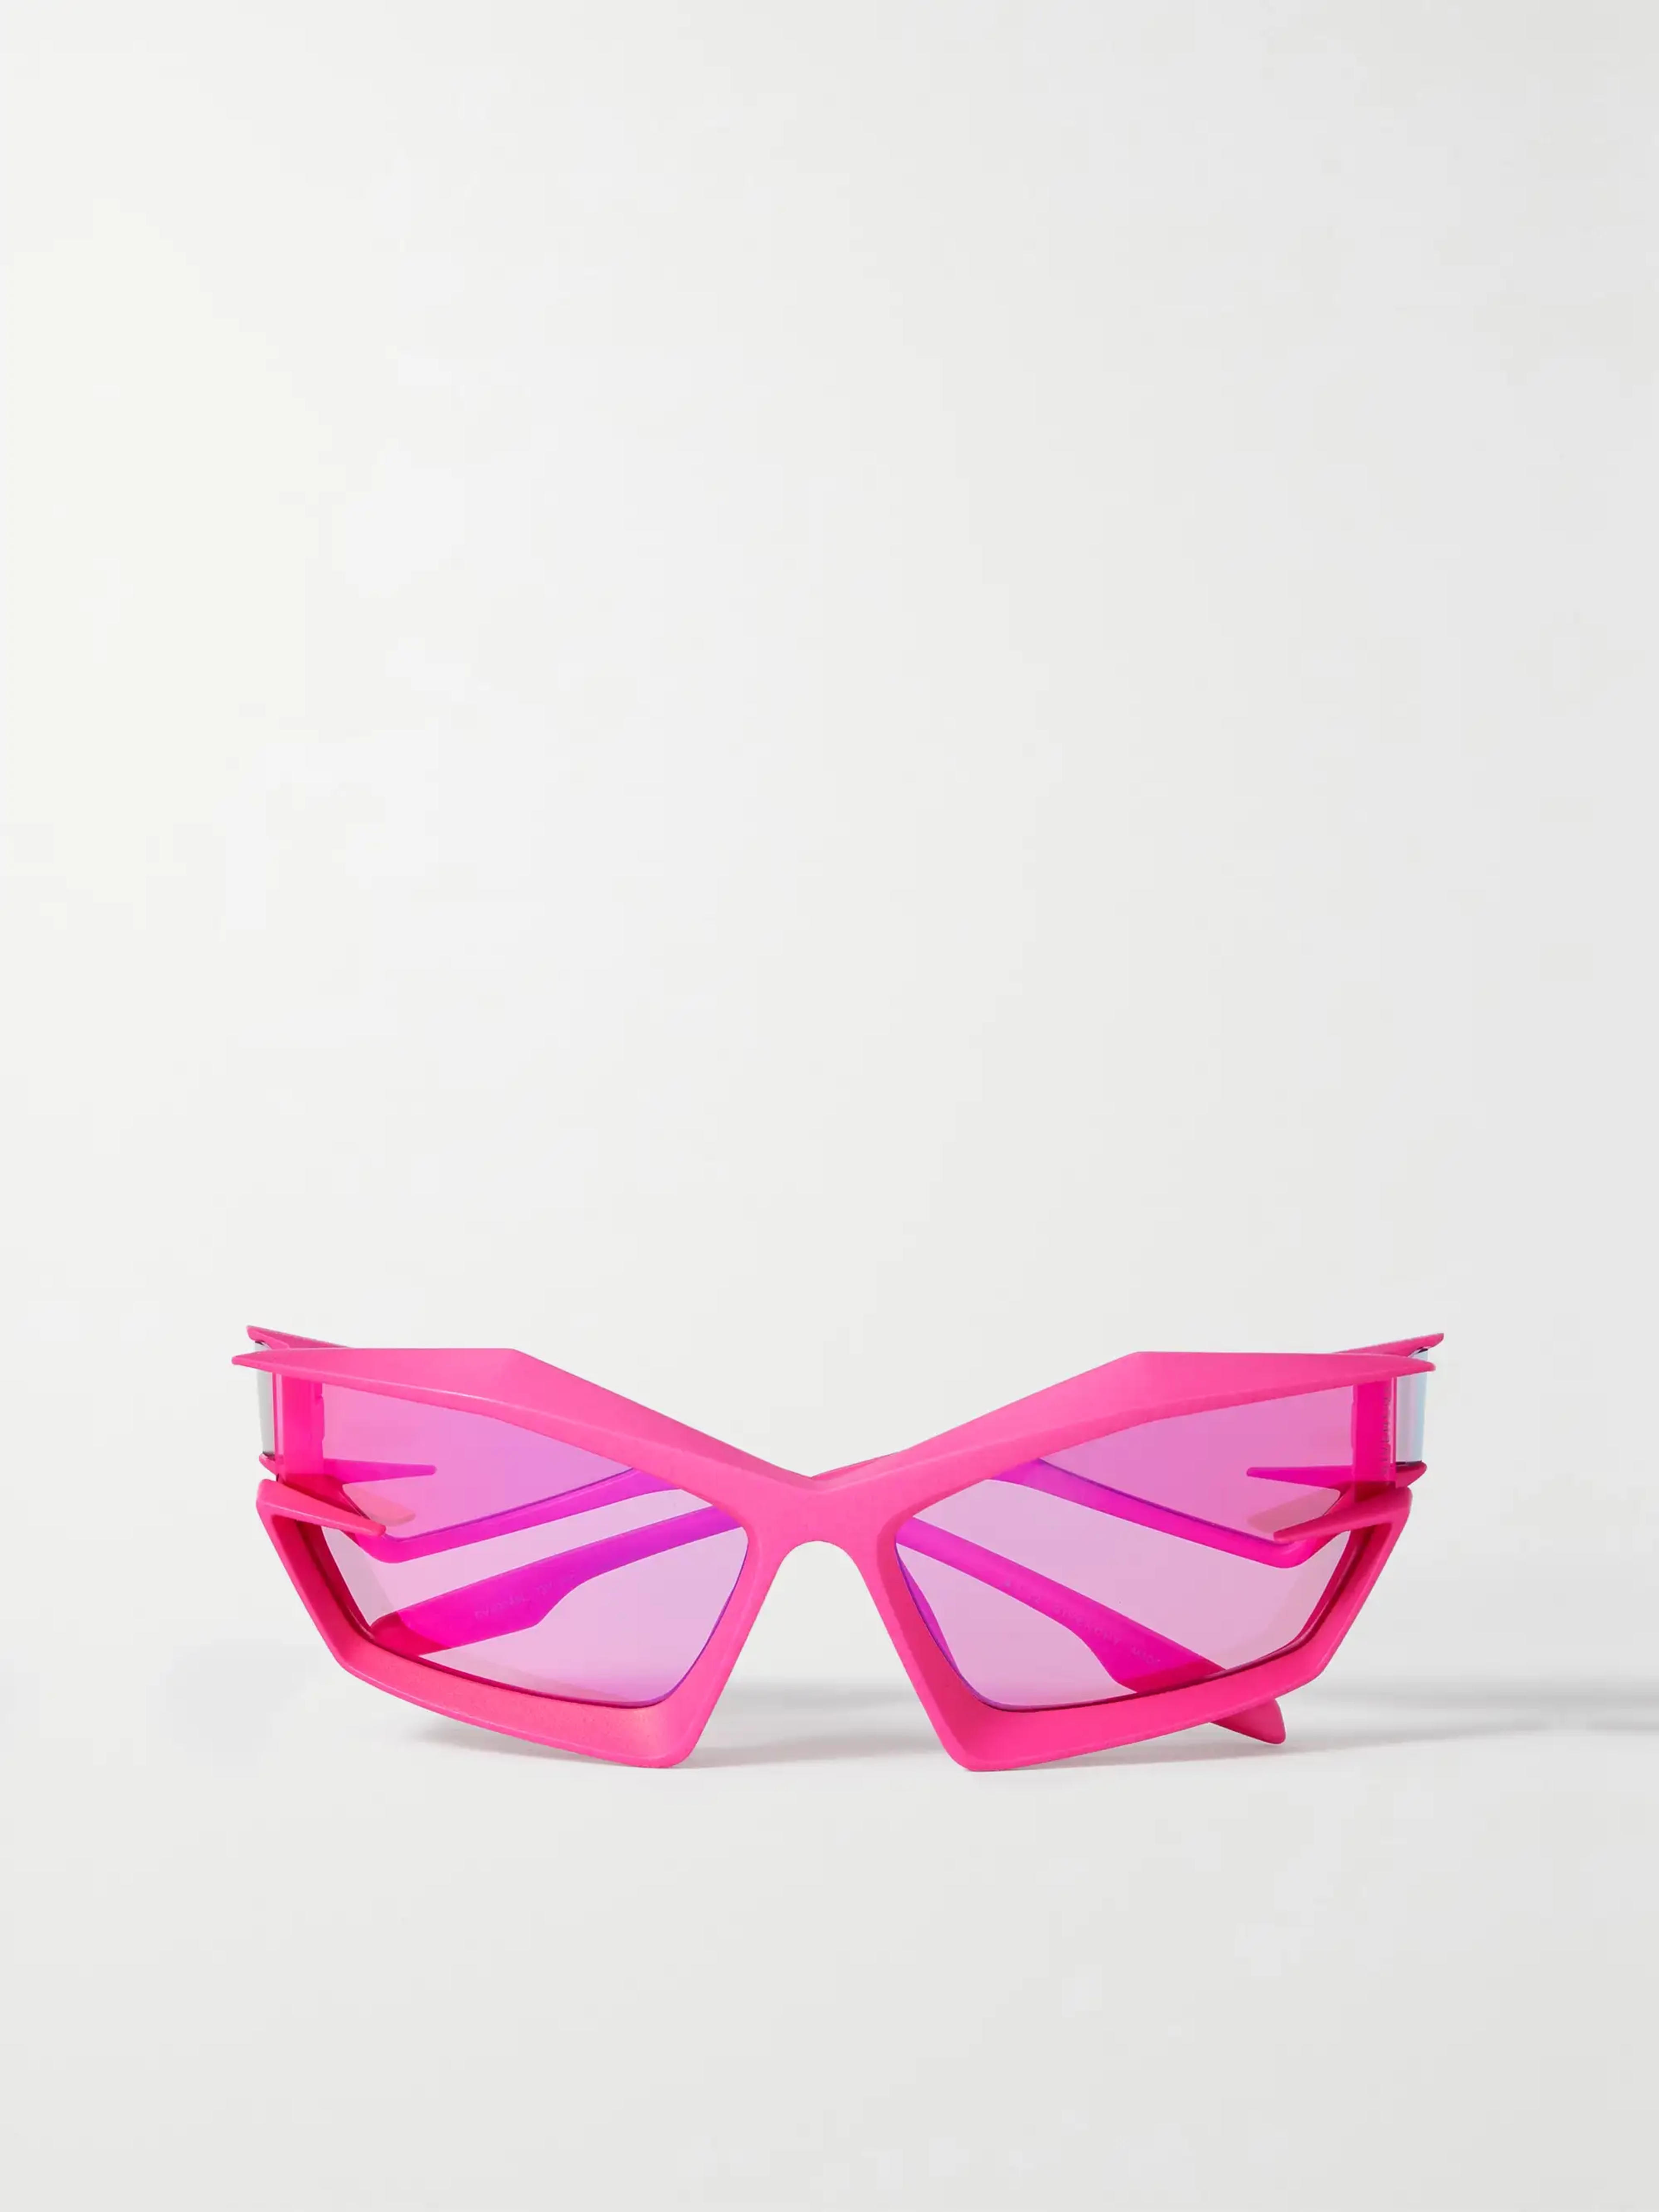 GIVENCHY EYEWEAR Giv Cut cat-eye nylon sunglasses | NET-A-PORTER